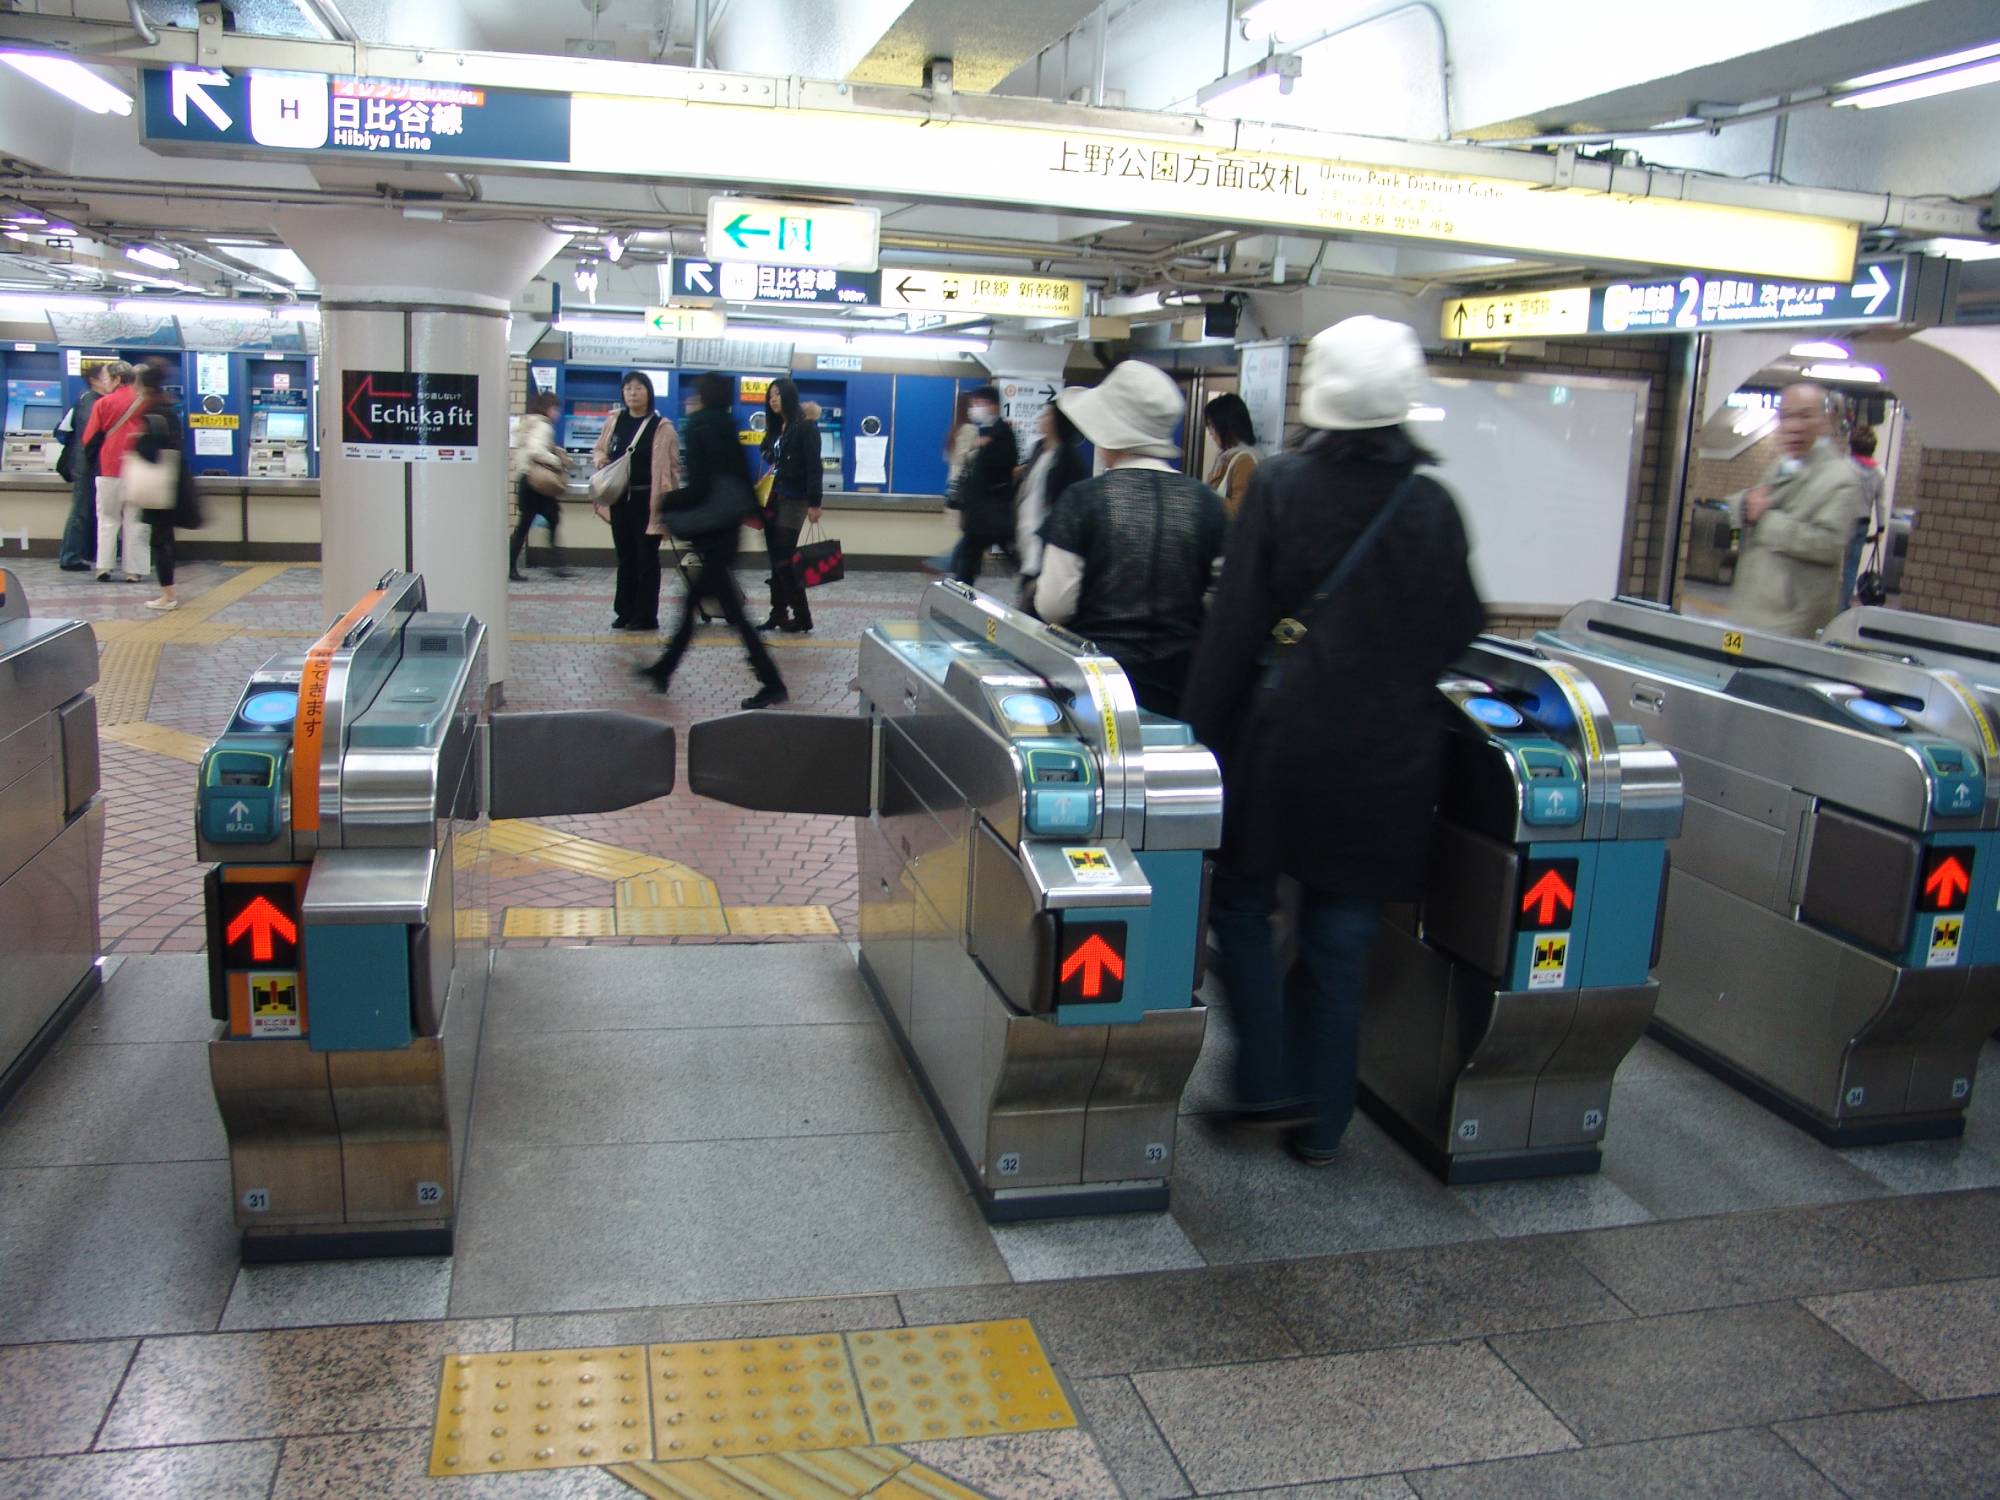 Japan - Tokyo subway